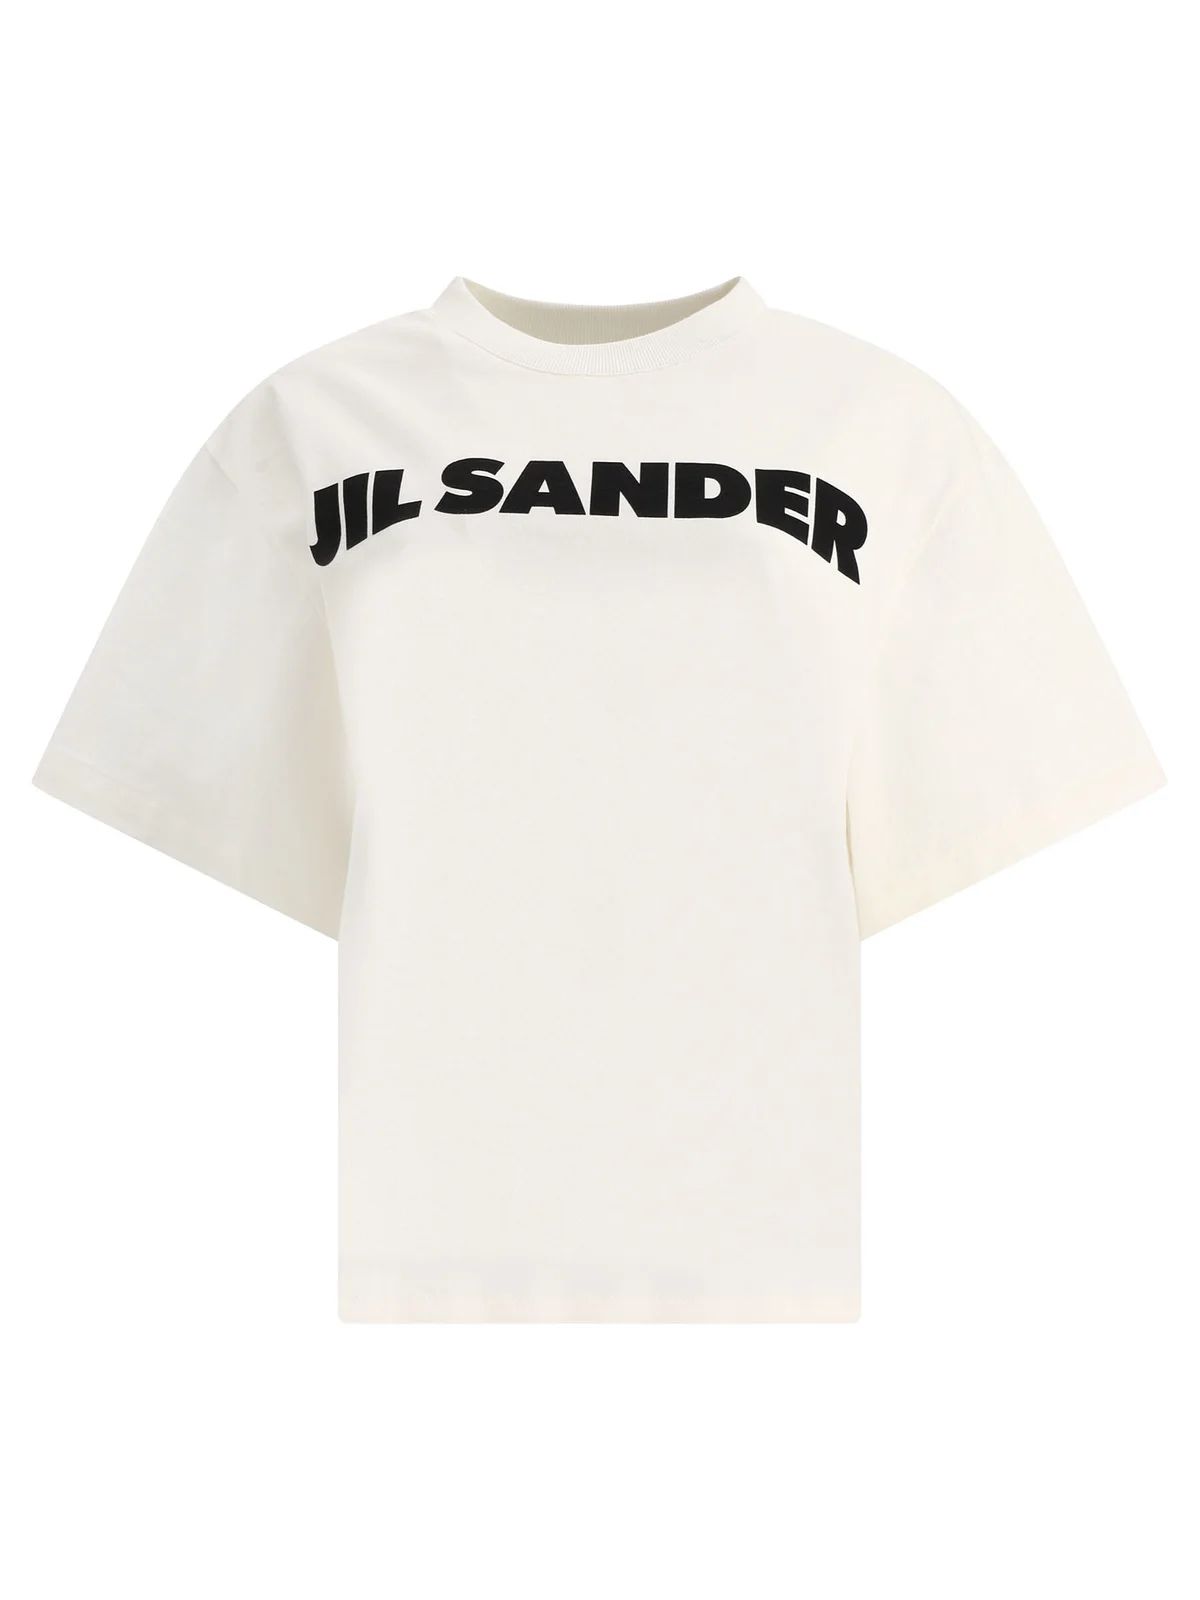 Jil Sander Logo Printed Crewneck T-Shirt | Cettire Global